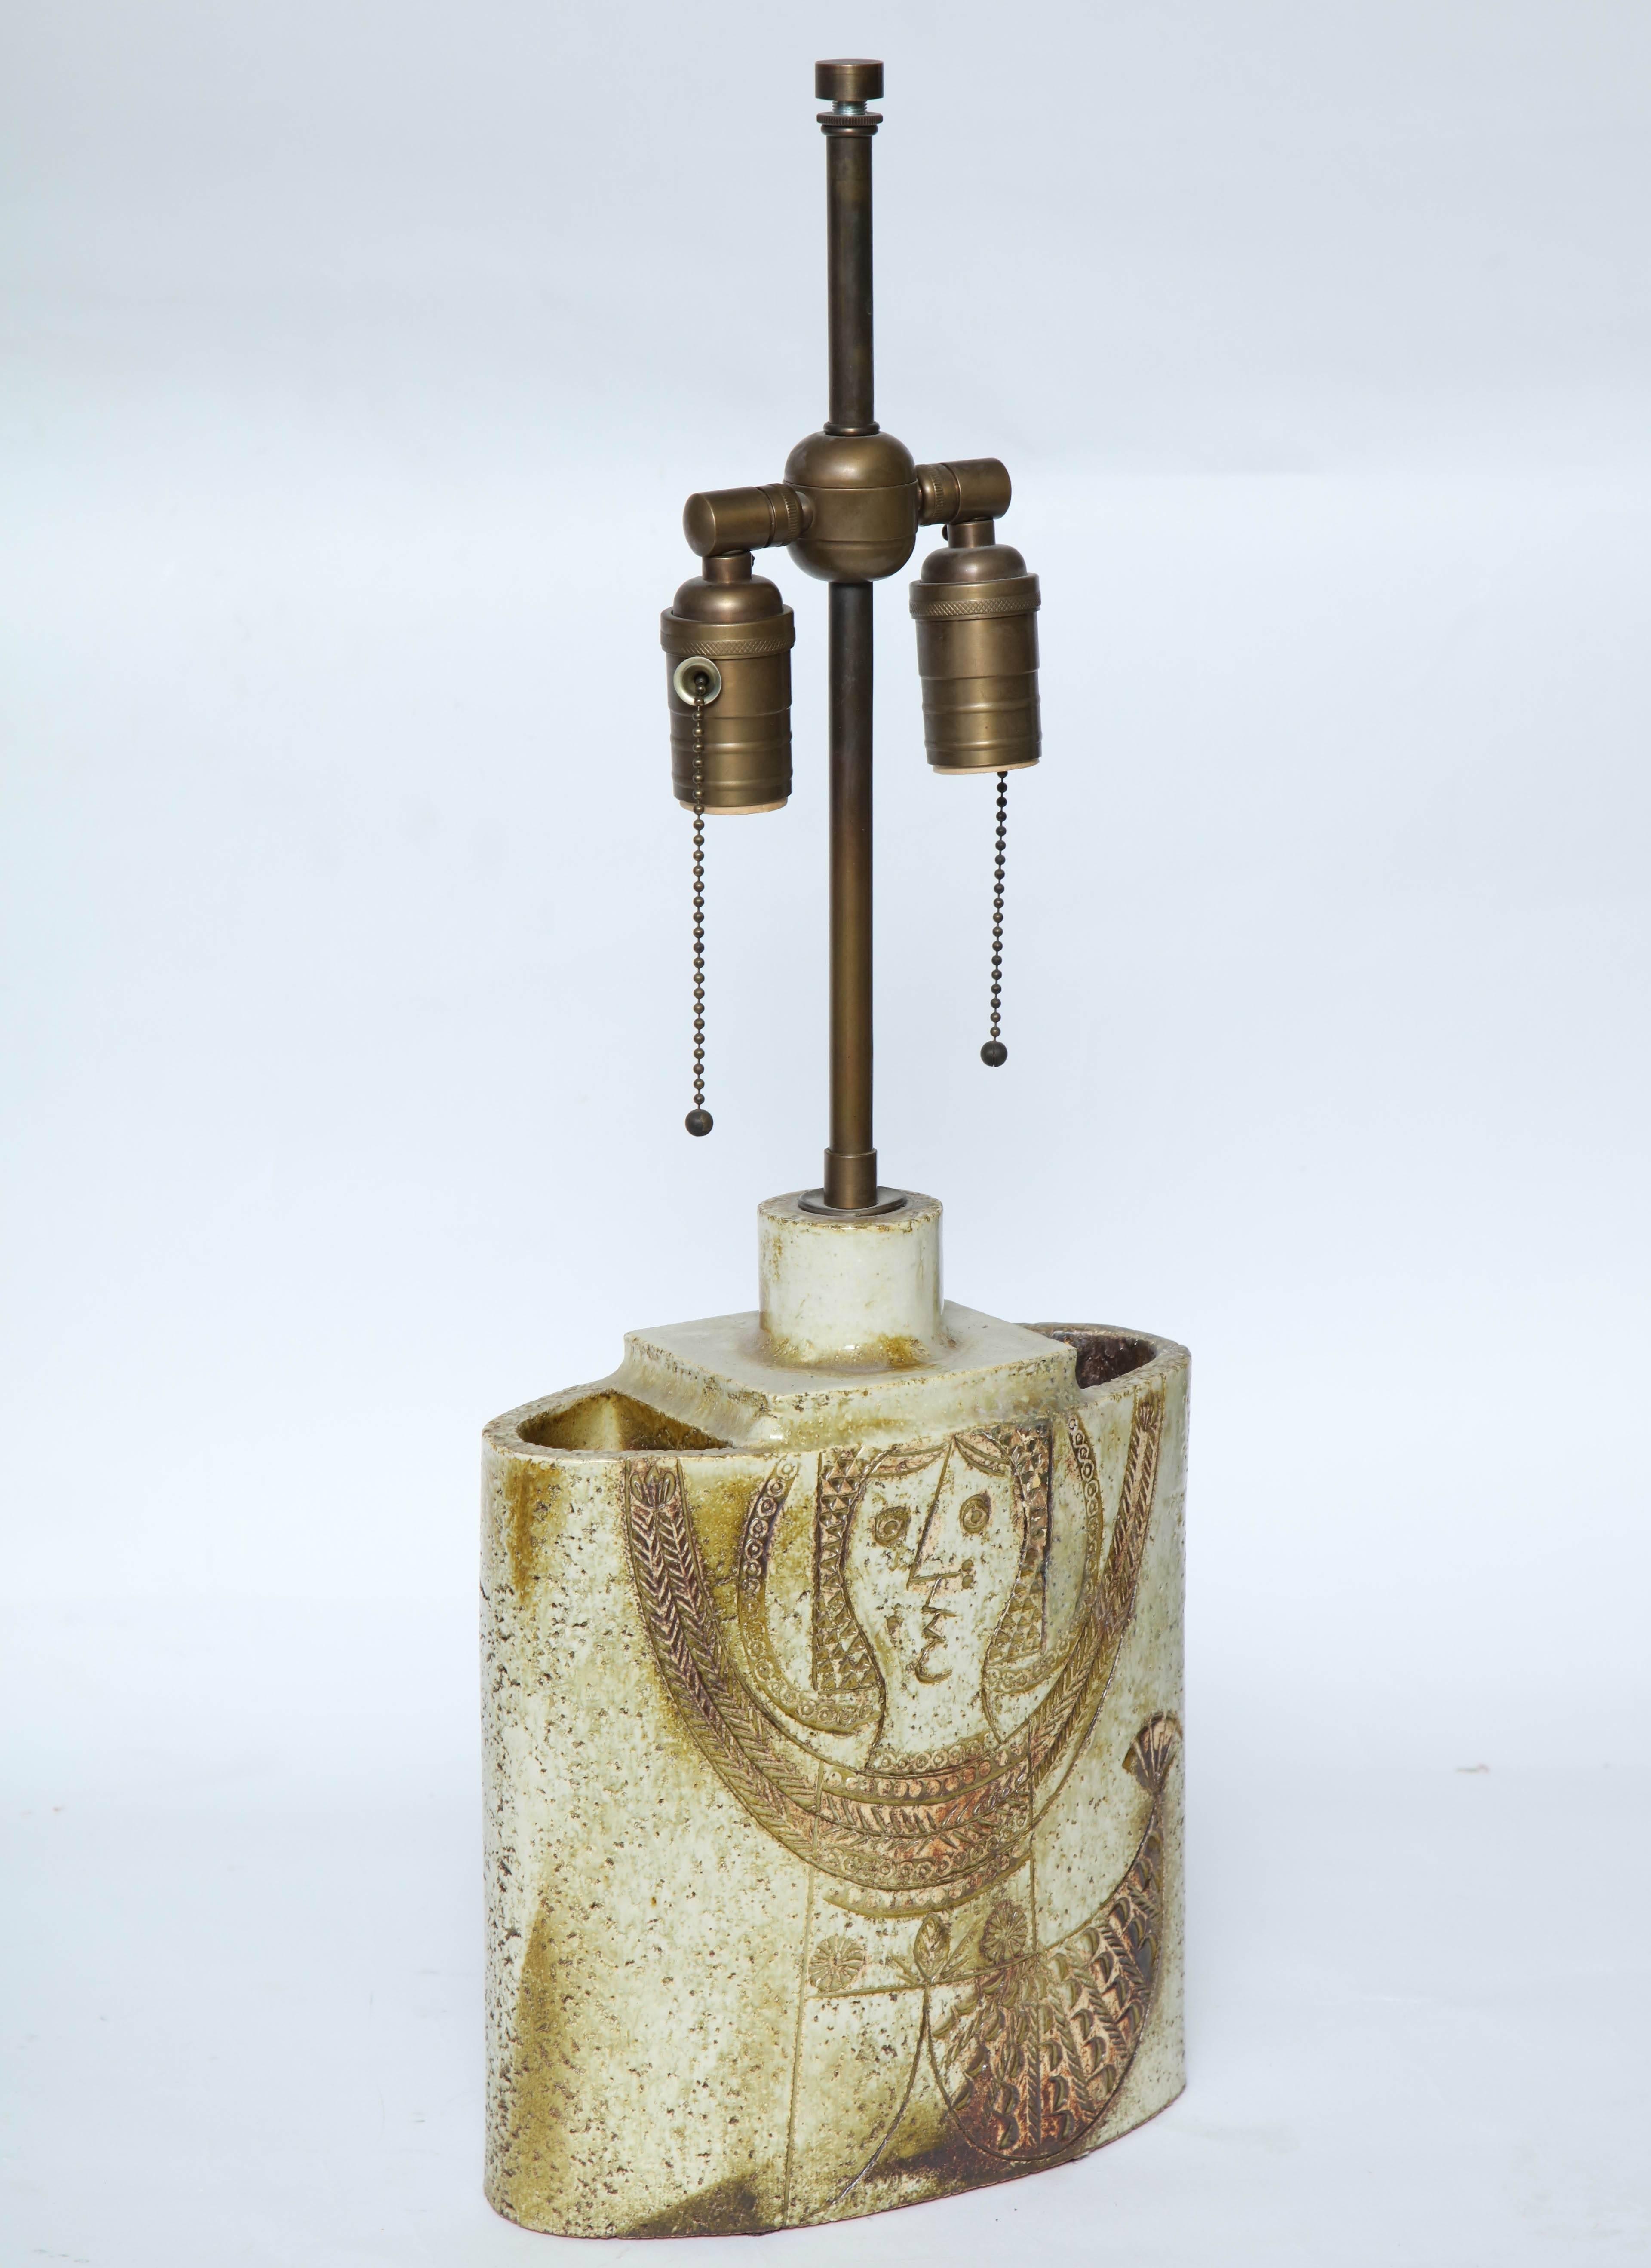 Etched Mid-Century Modern Ceramic Table Lamp signed Capron Valauris Paris France